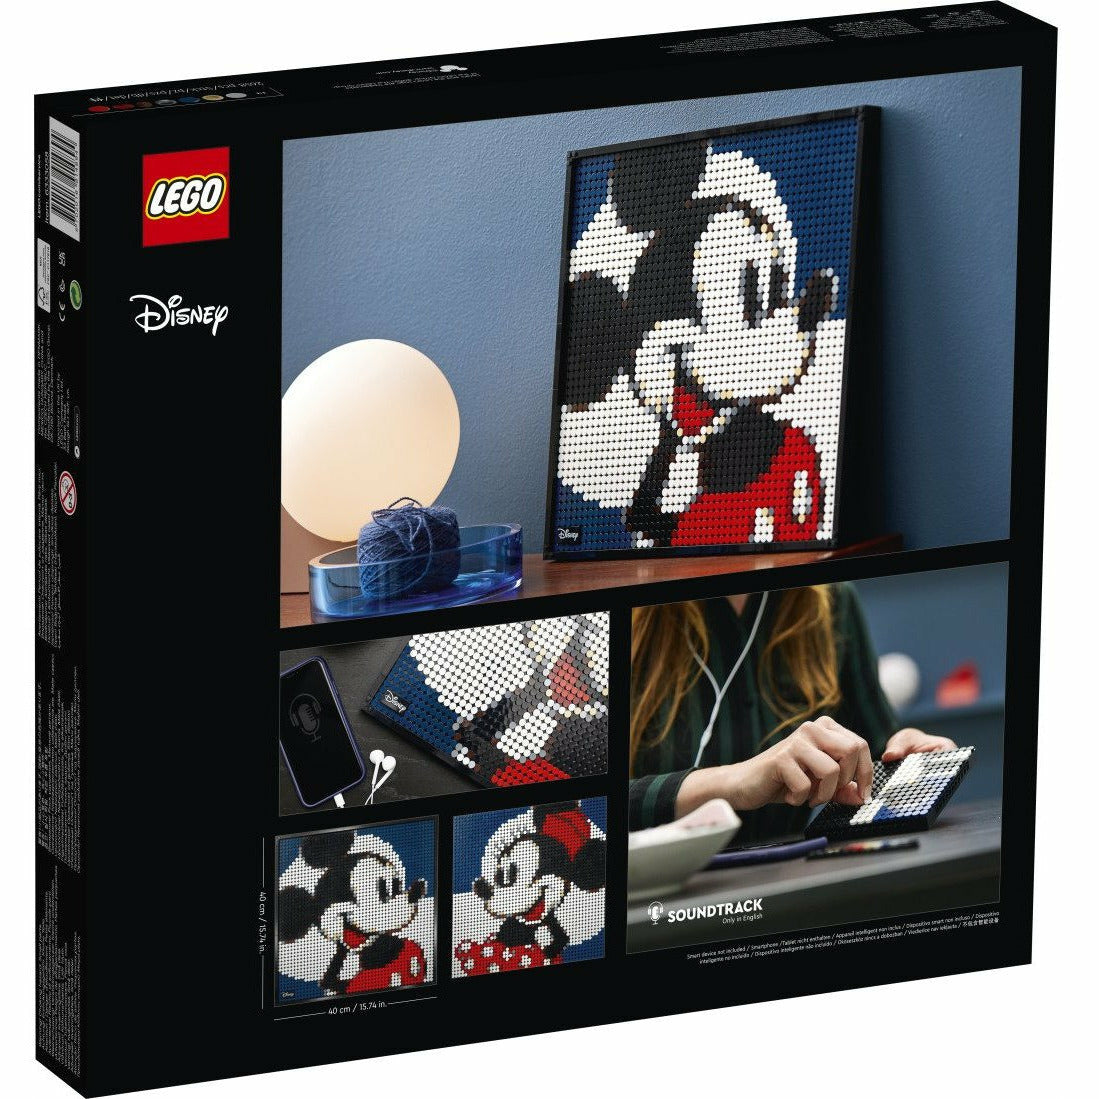 Lego® | 31202 | Disney's Mickey Mouse